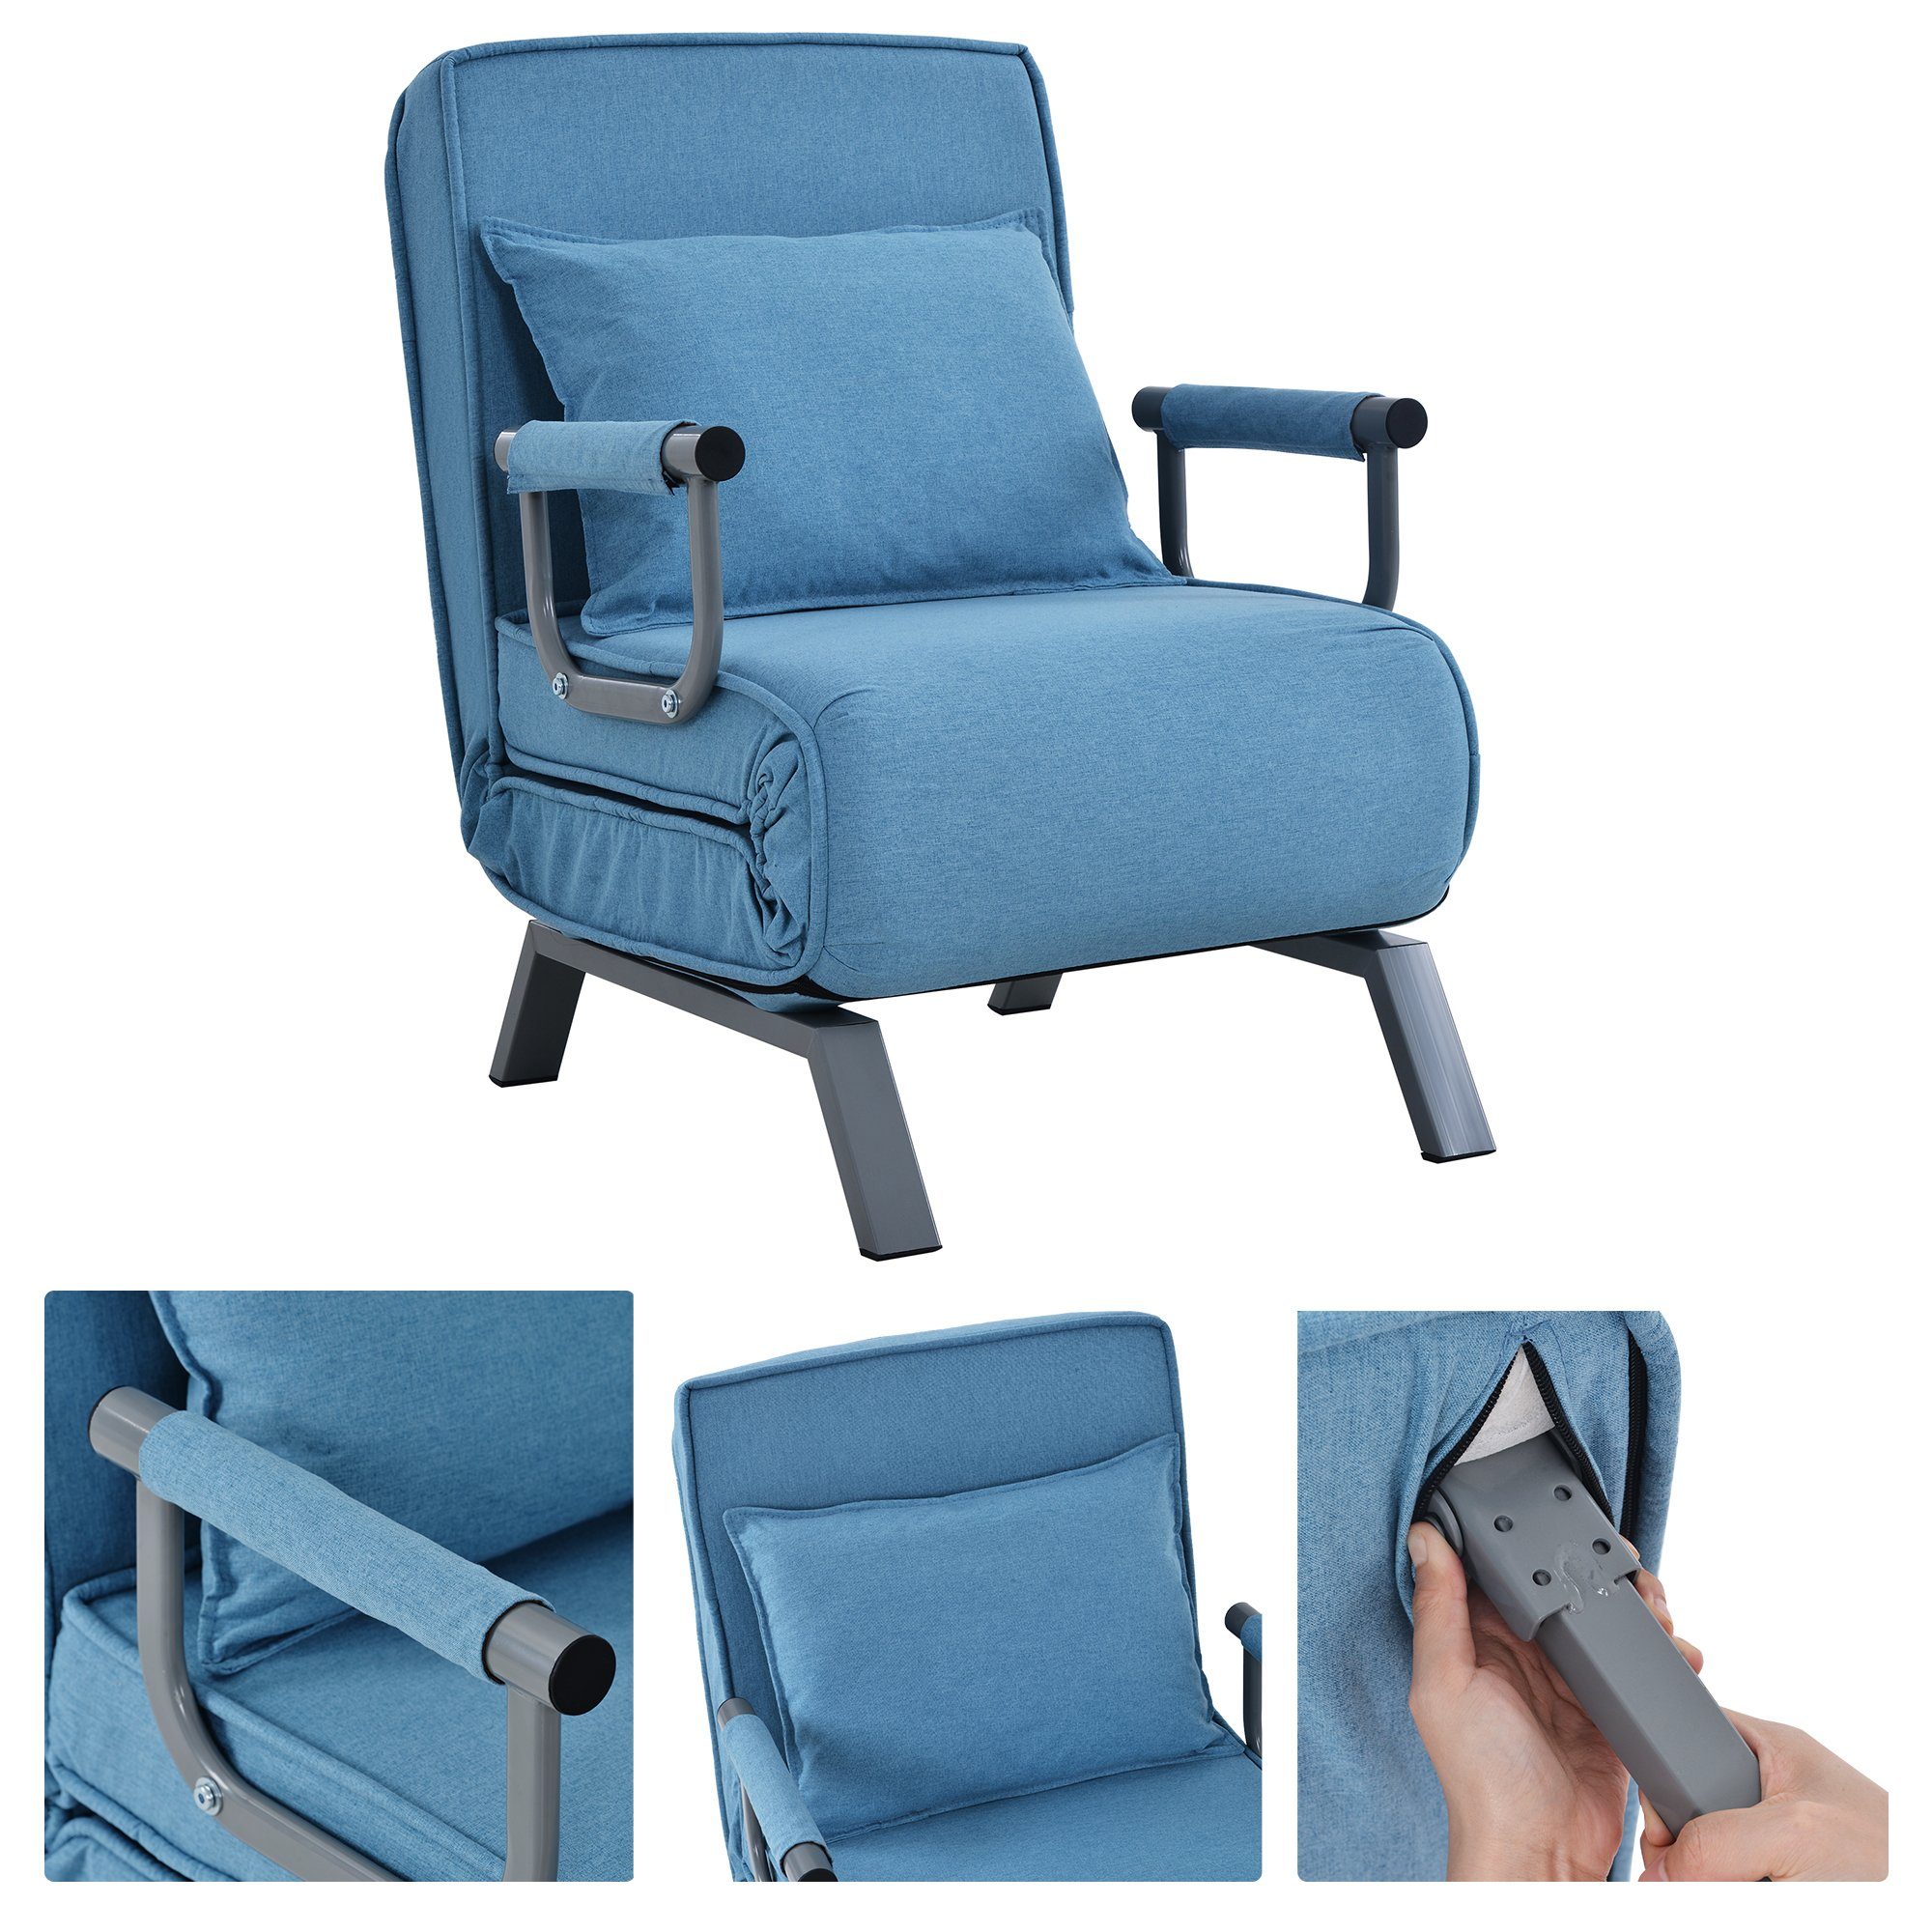 Flieks Relaxliege, faltbarer Schlafsessel, klappbarer Blau Sessel mit Kissen, Bürosessel